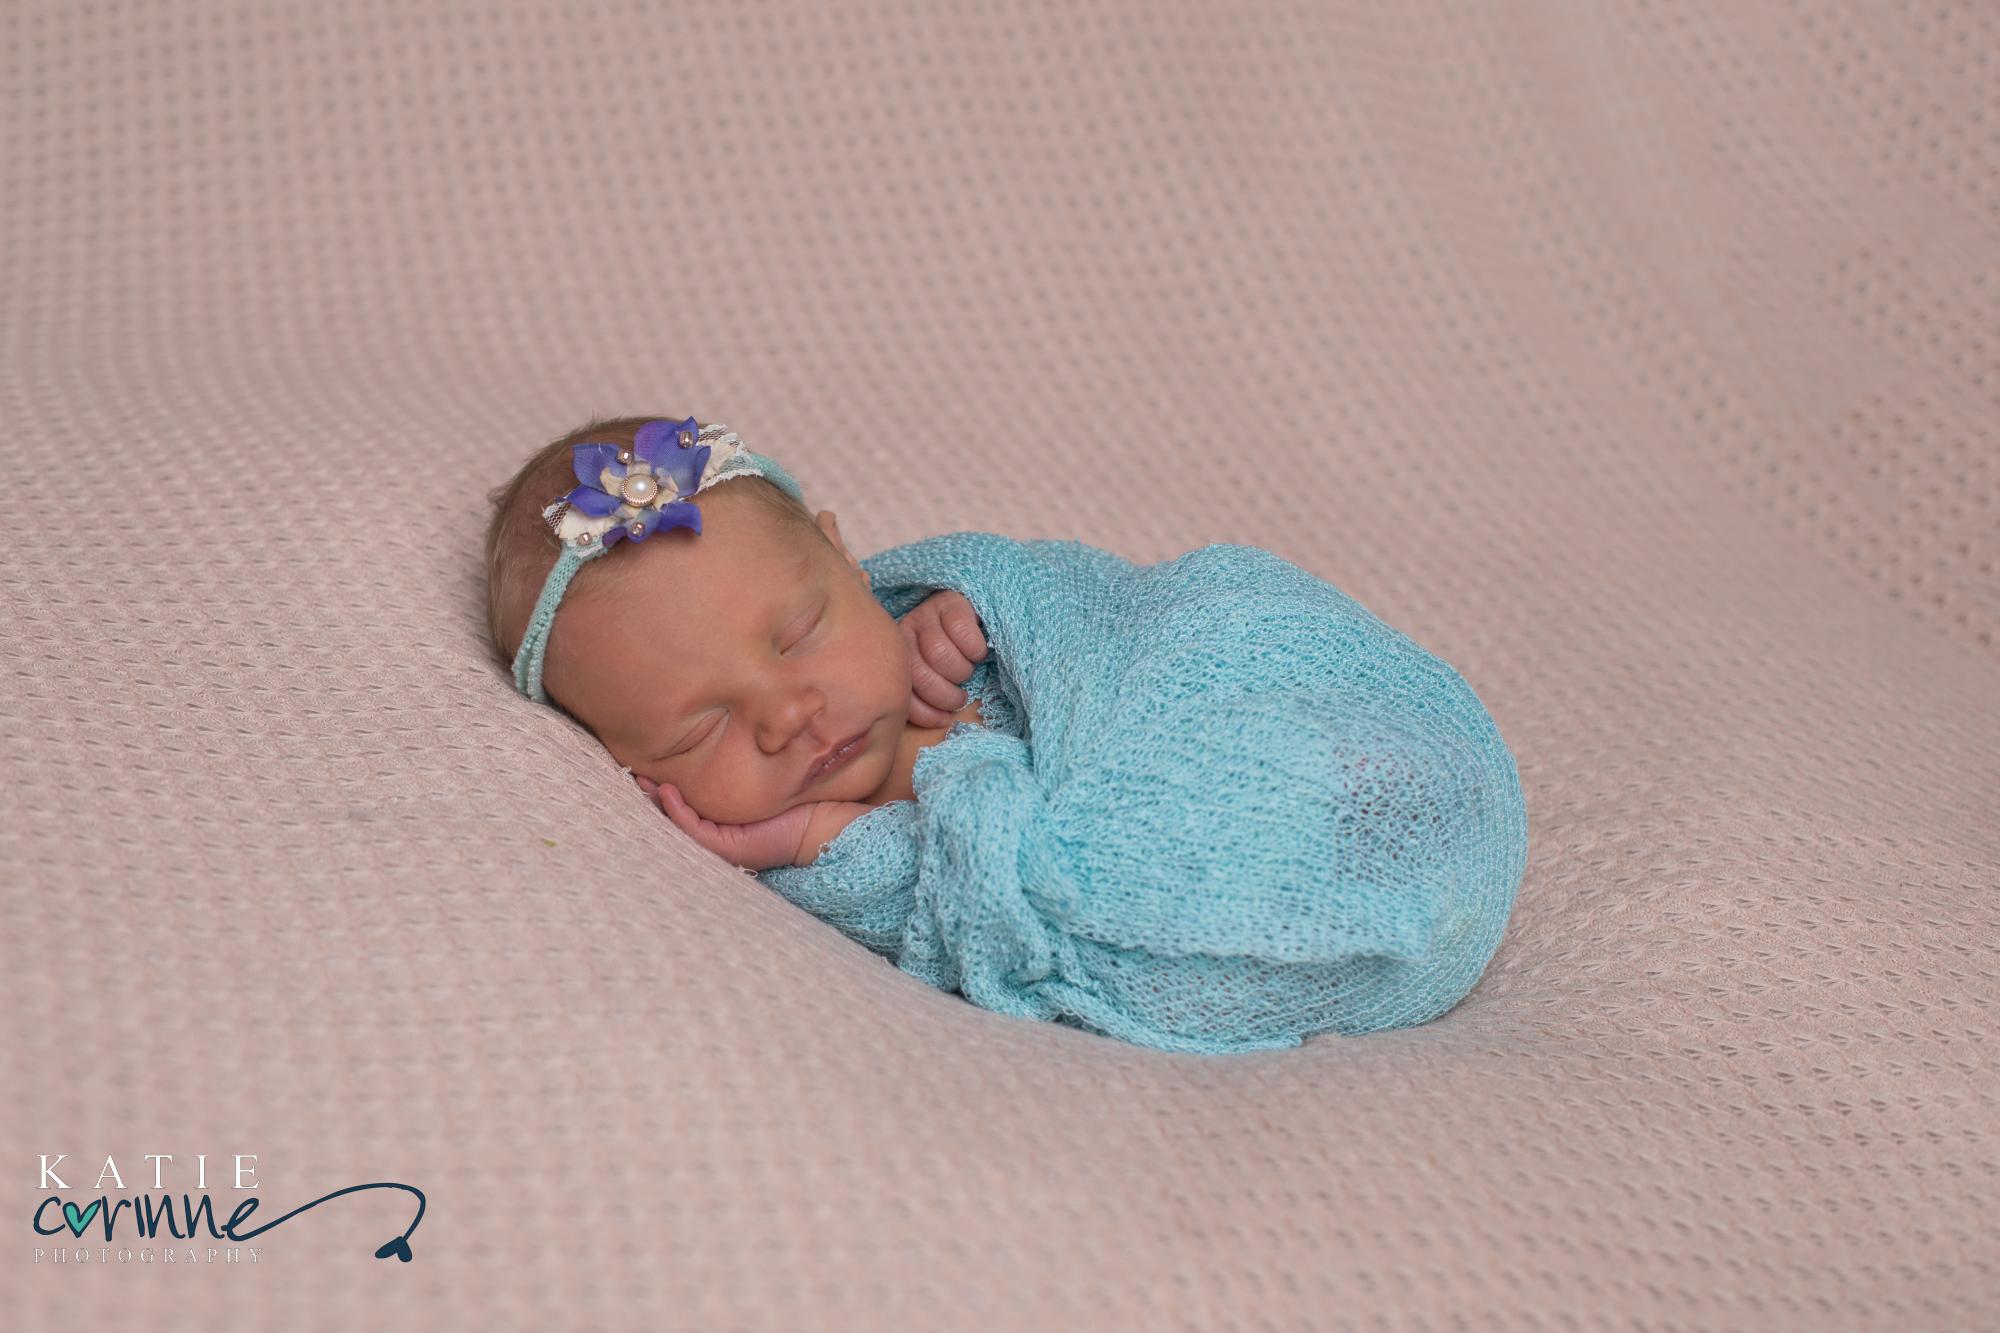 Colorado newborn baby girl photographed in studio